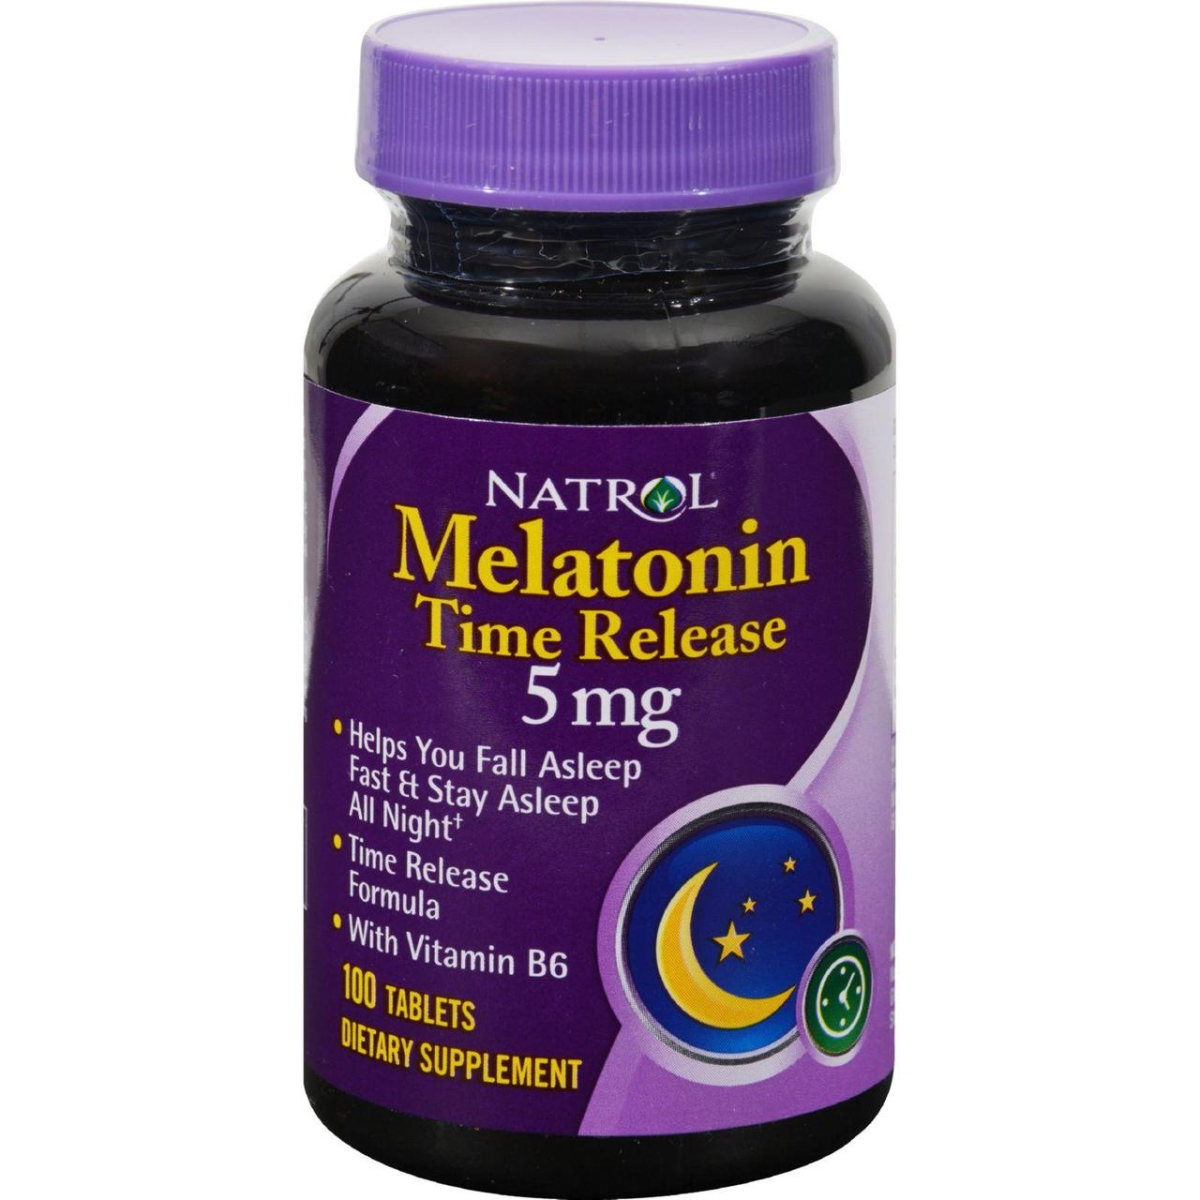 Hg0921205 5 Mg Melatonin Time Release - 100 Tablets